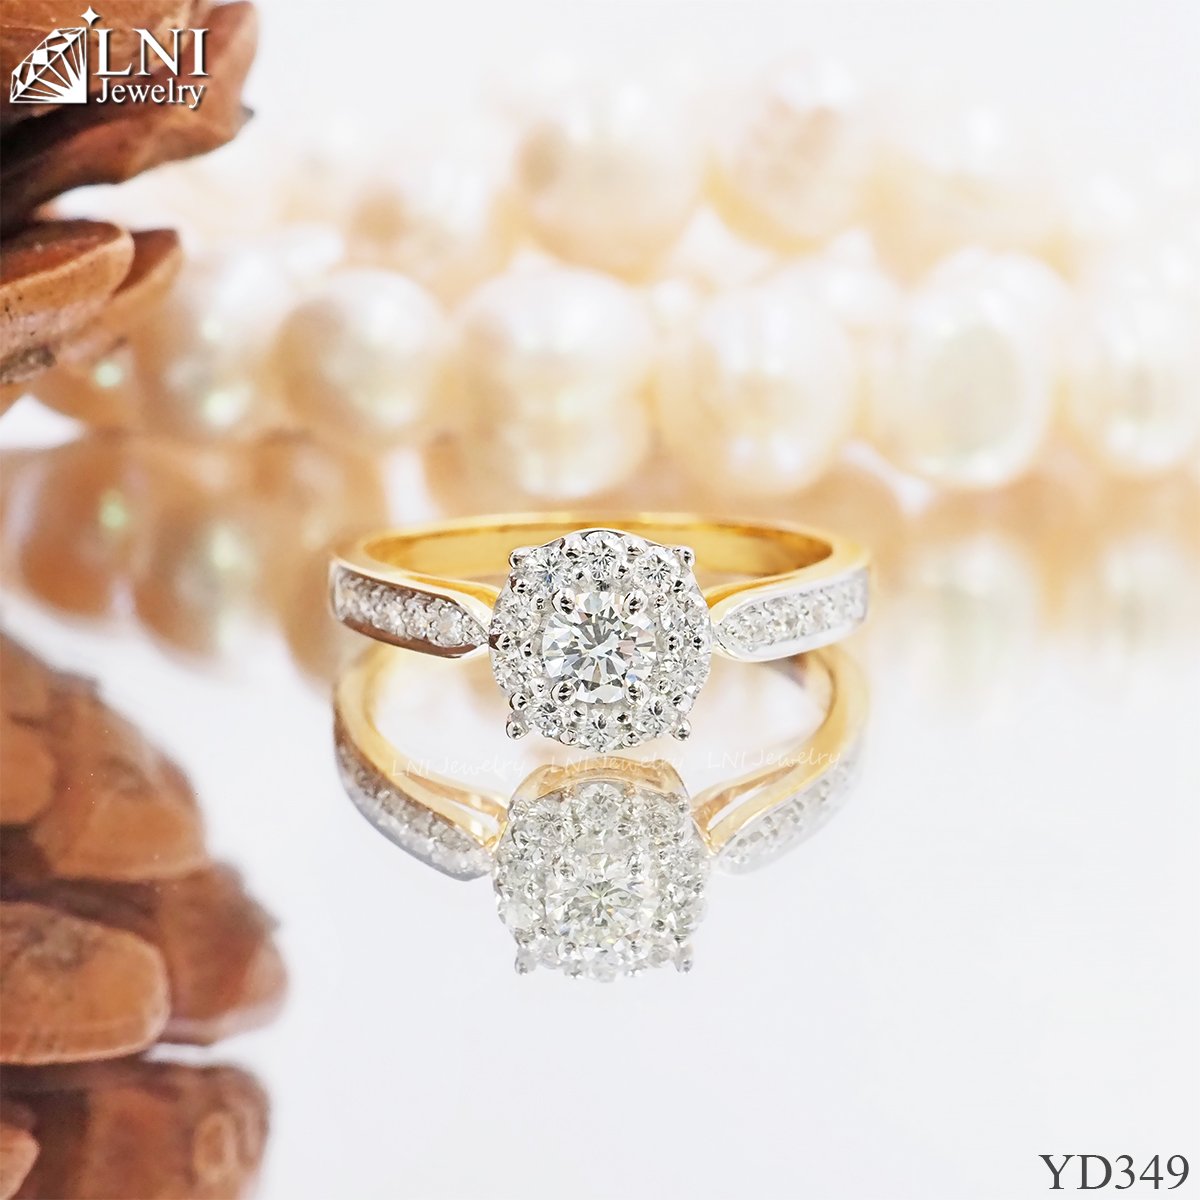 YD349 Halo Diamond Ring